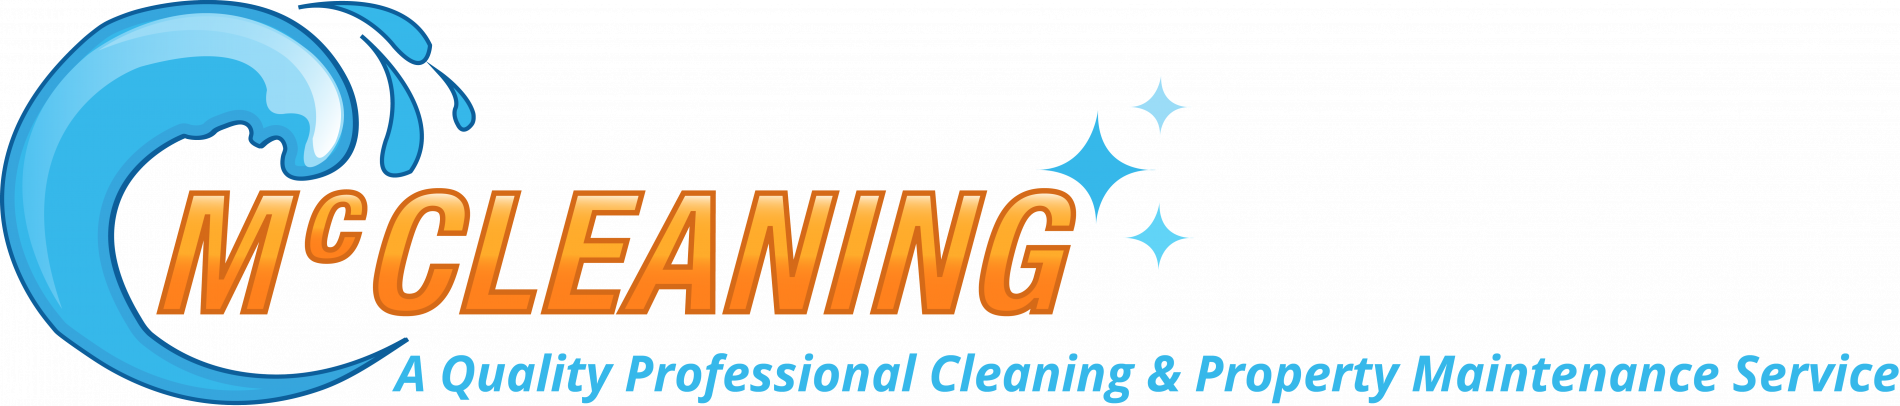 Professional window cleaning in Weybridge | McCleaning